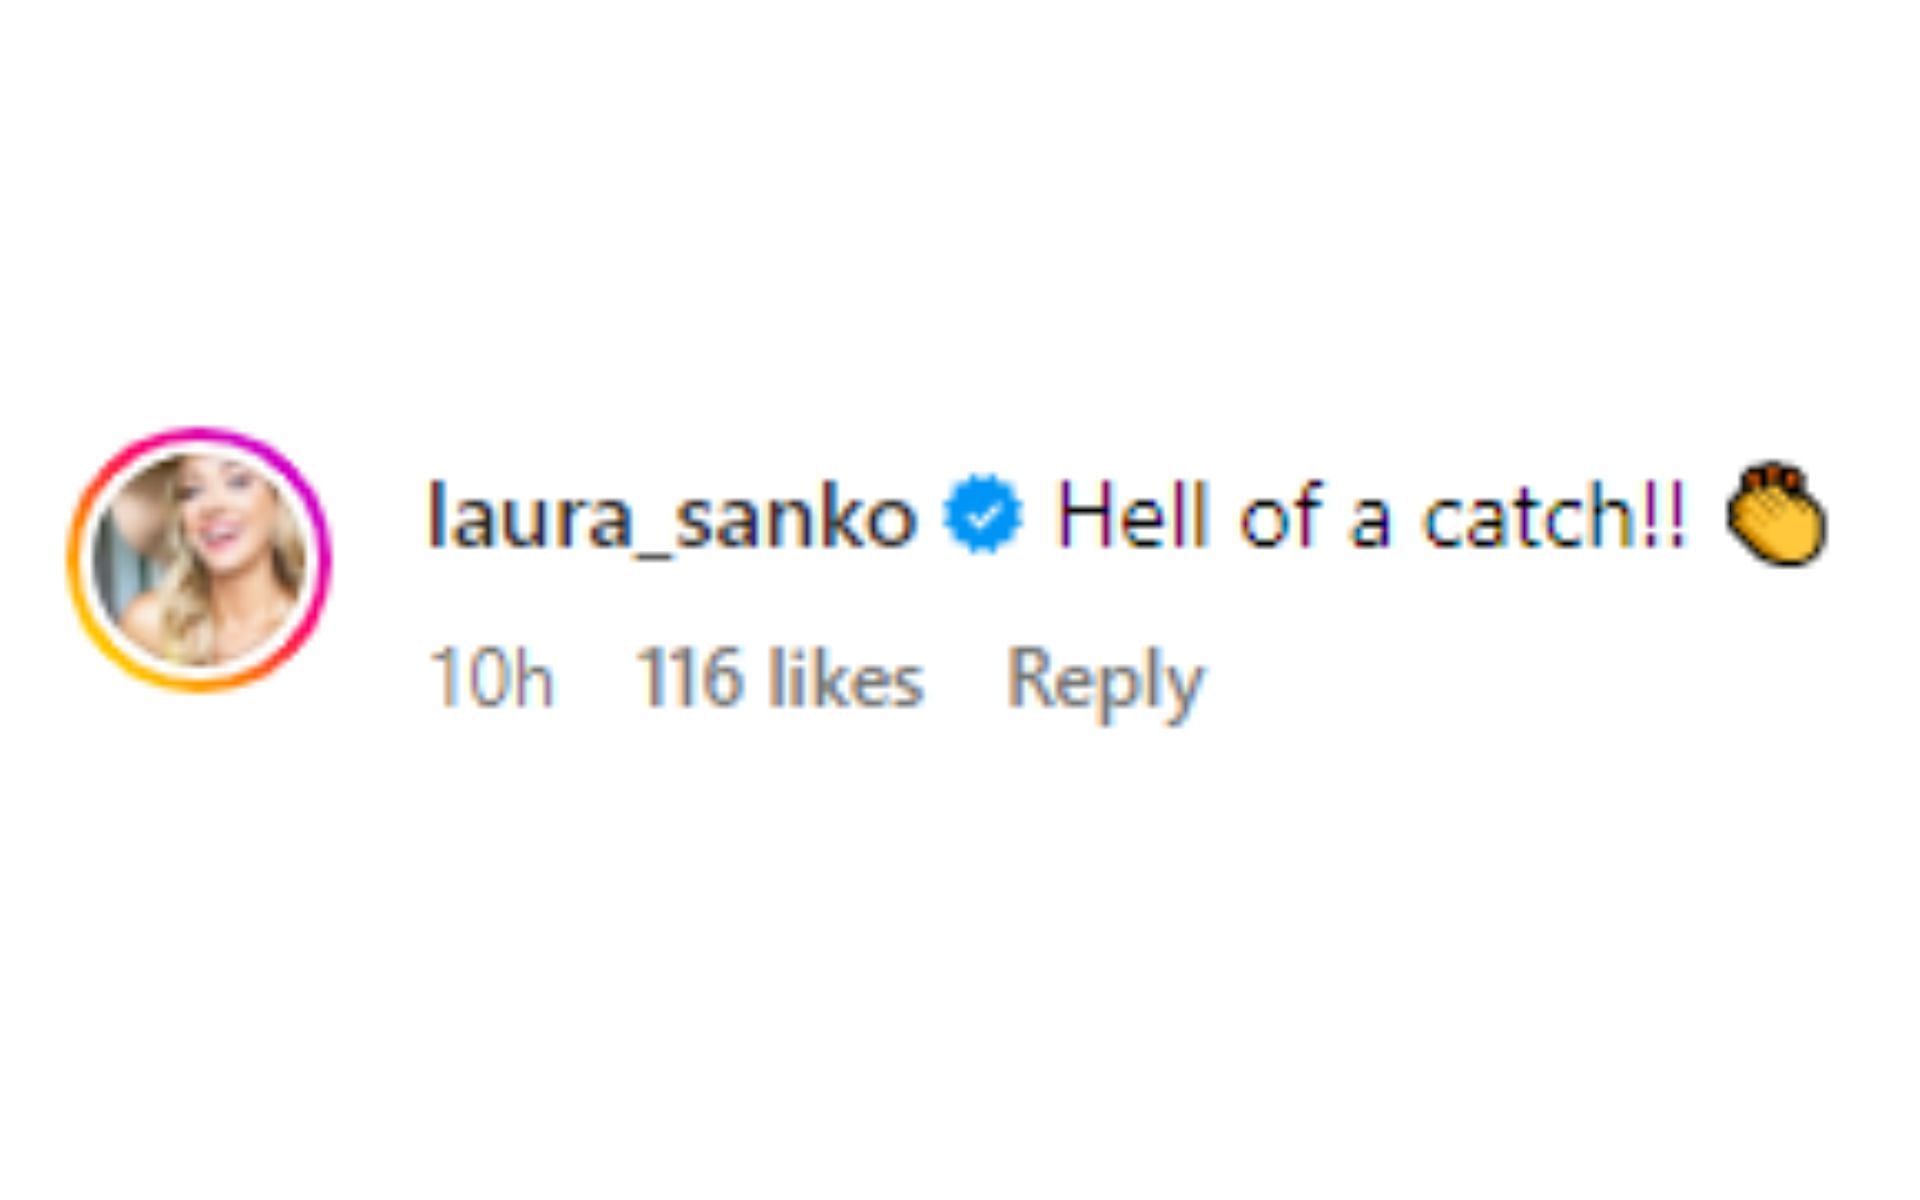 Laura Sanko&#039;s reaction to the photo [Image courtesy: @joerogan - Instagram]